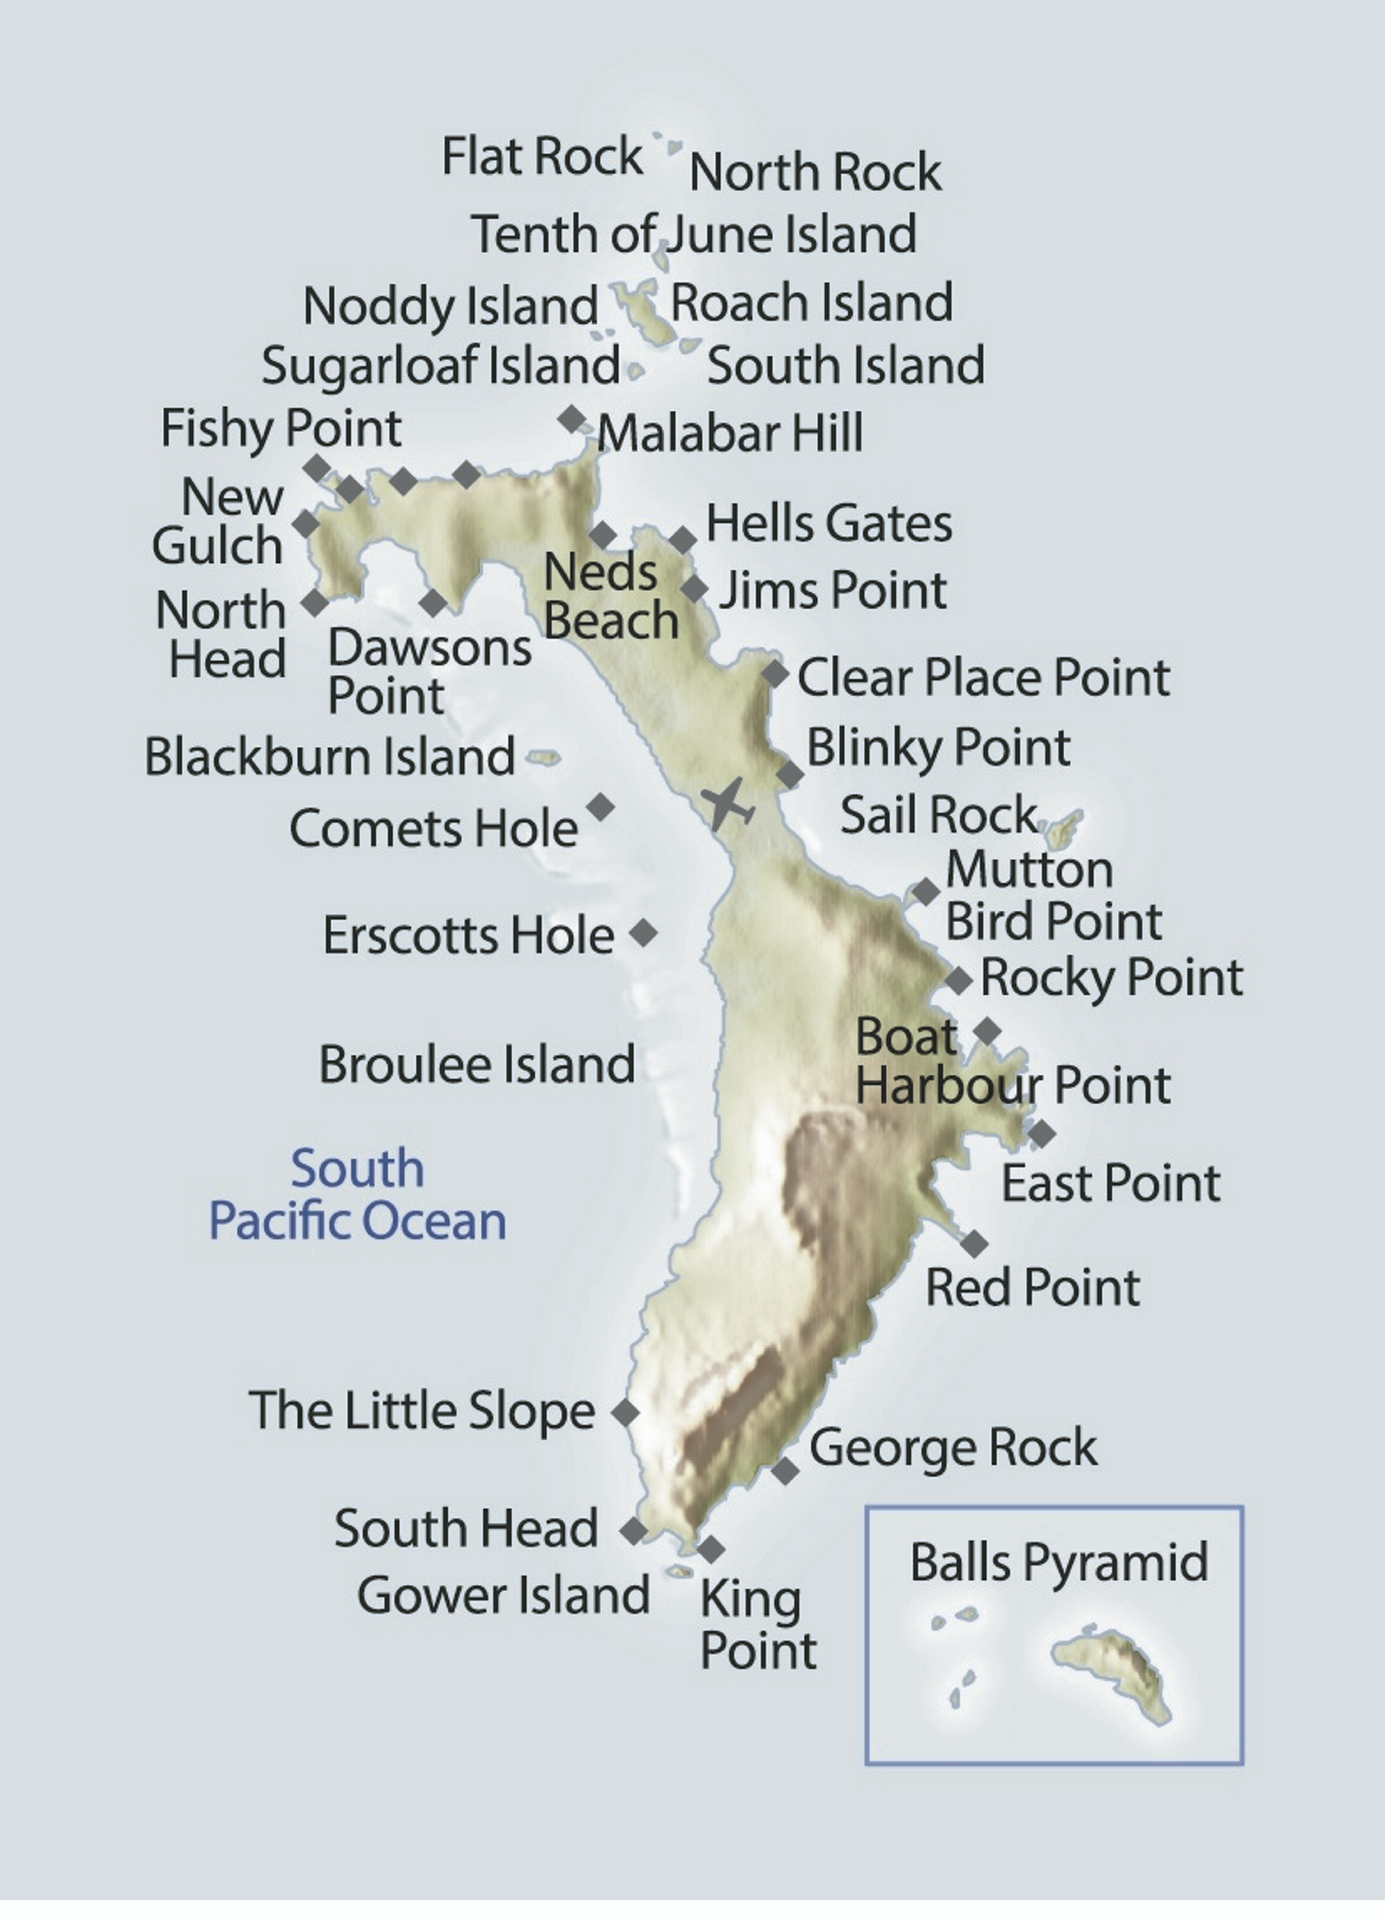 Lord Howe Island